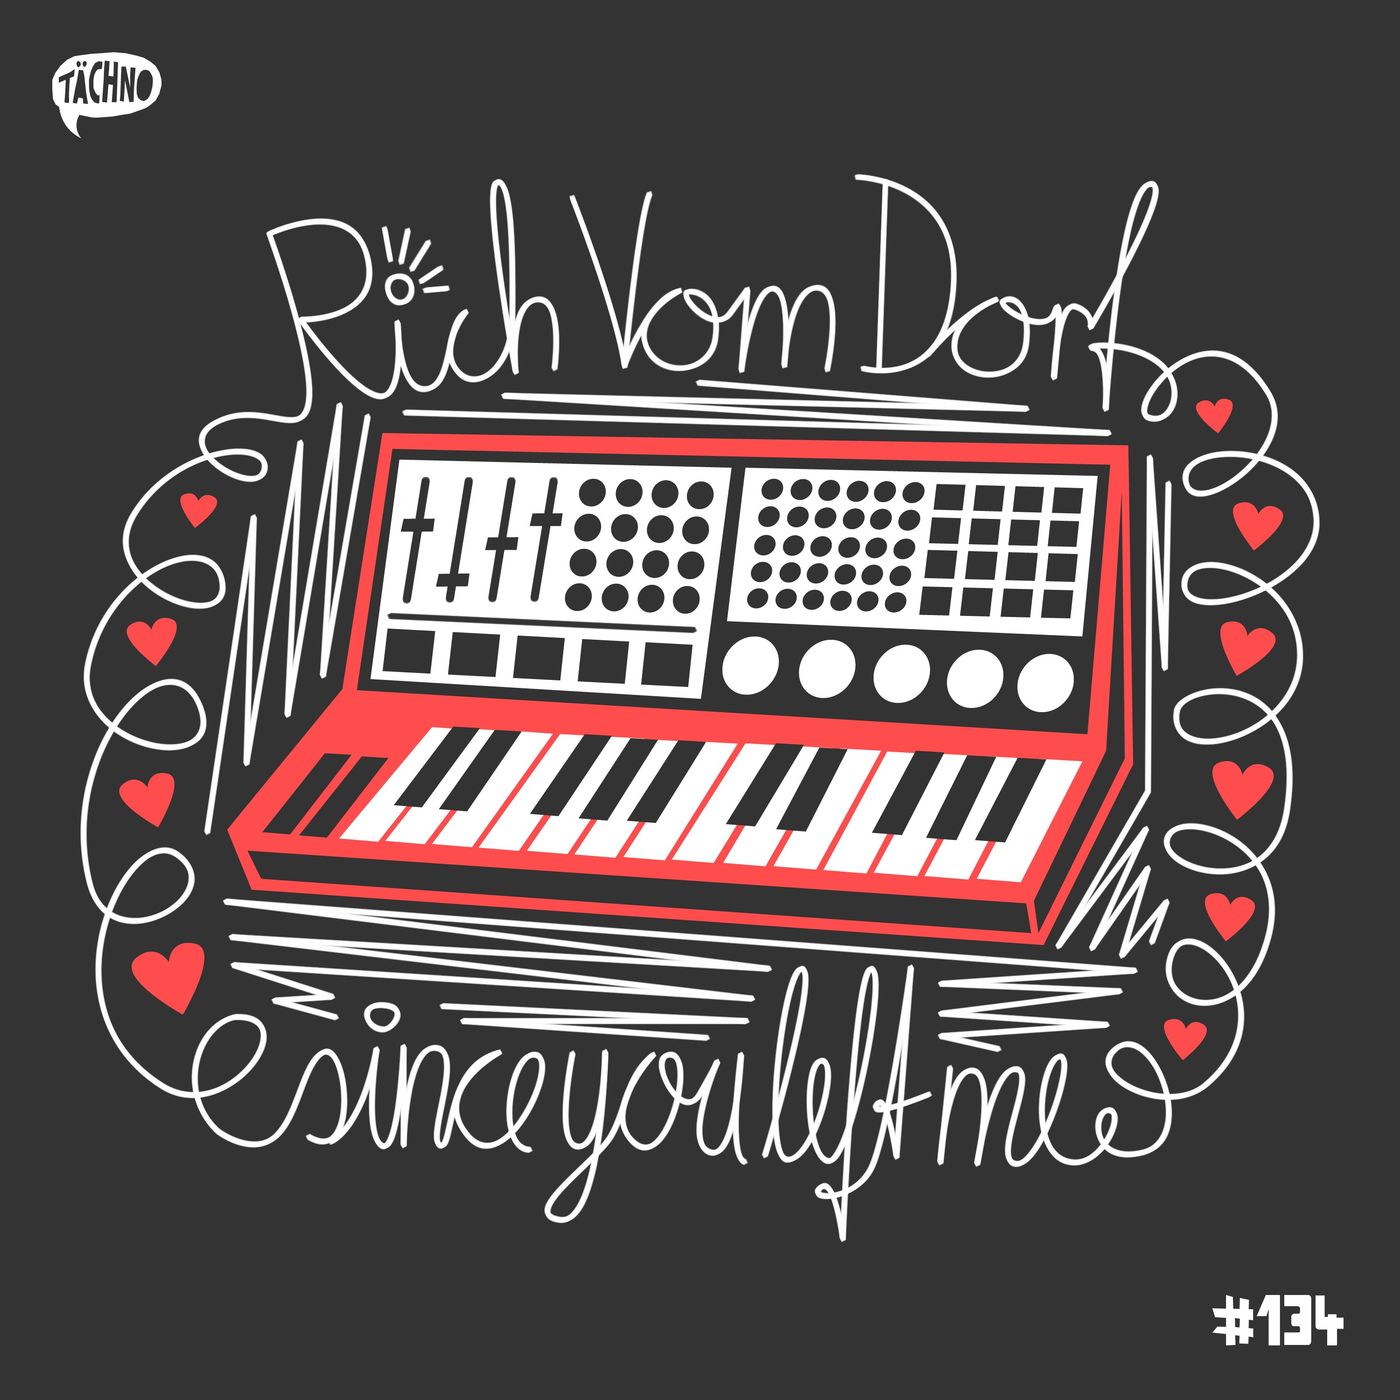 Rich Vom Dorf - Since You Left Me (Original Mix)